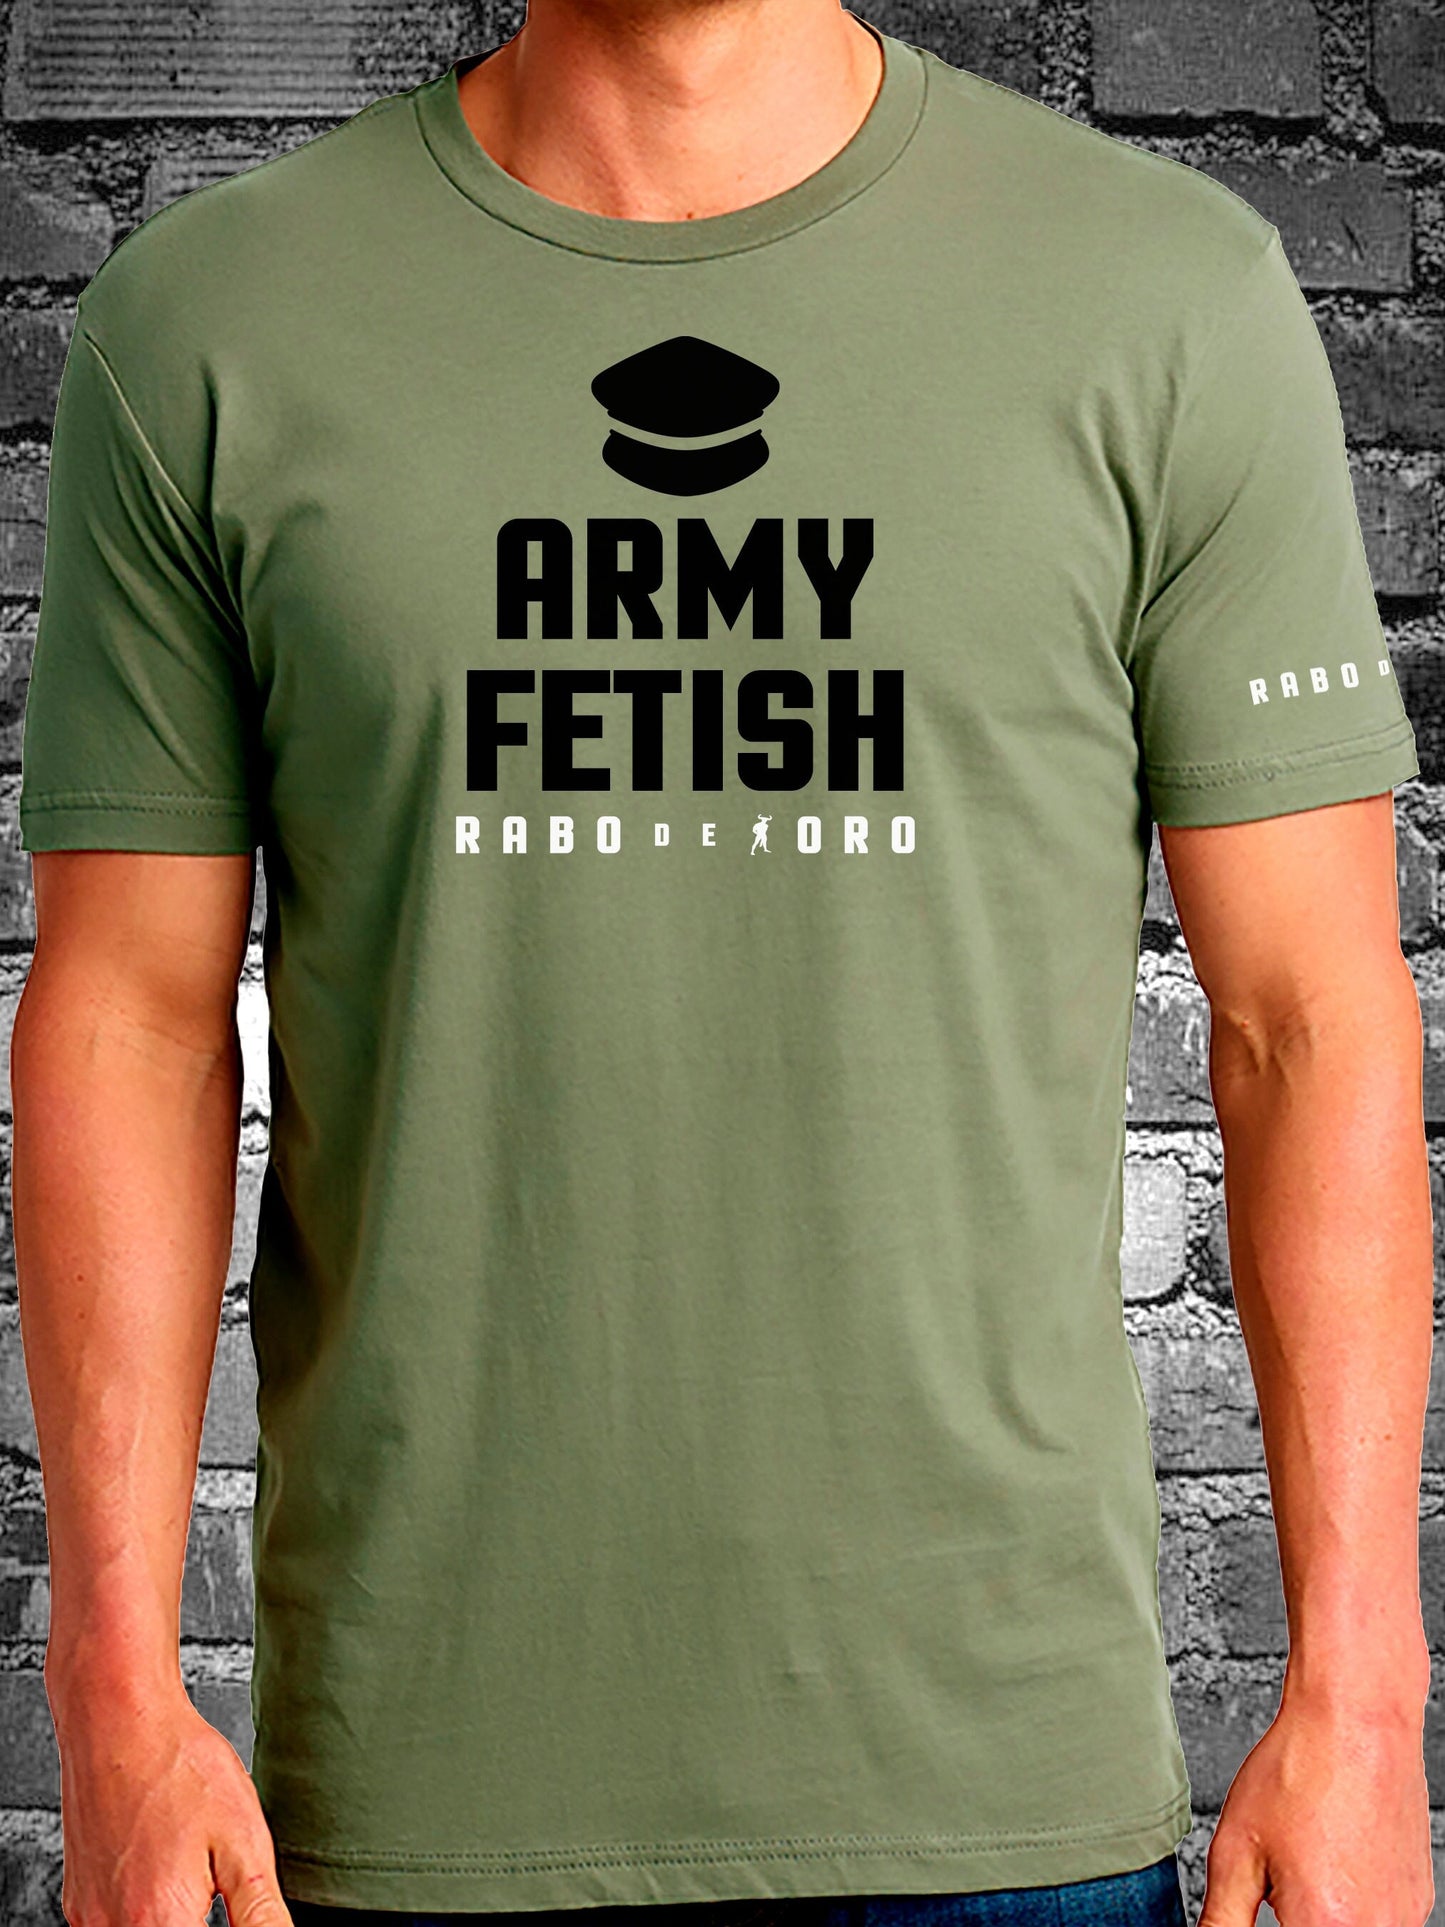 ARMY FETISH Camiseta verde oliva con detalle de gorra militar negra